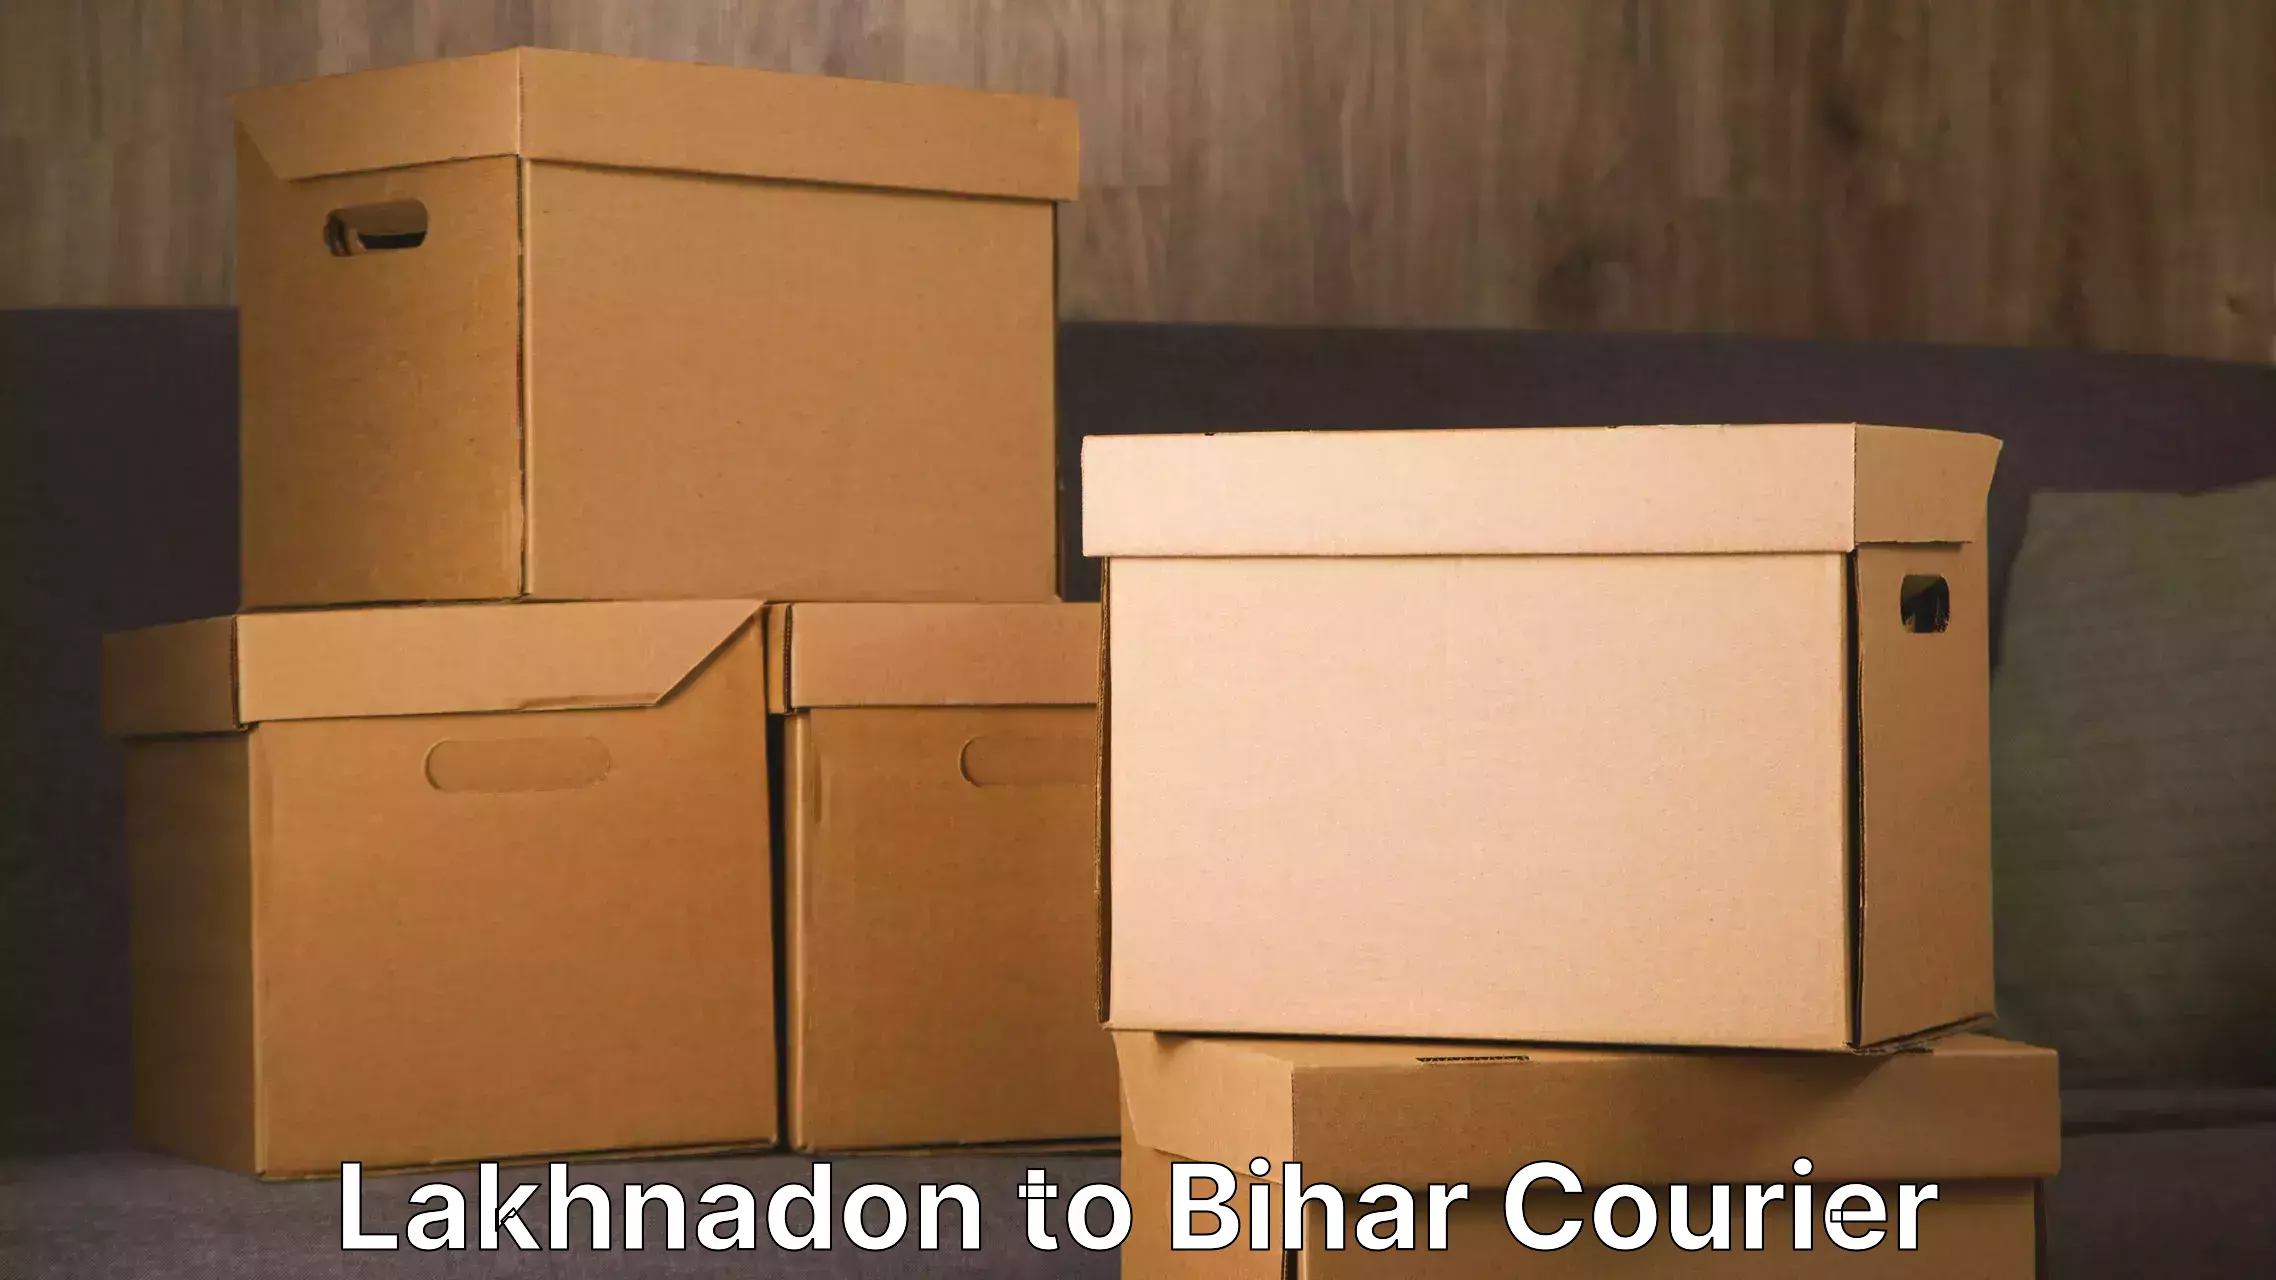 Moving service excellence Lakhnadon to Bihar